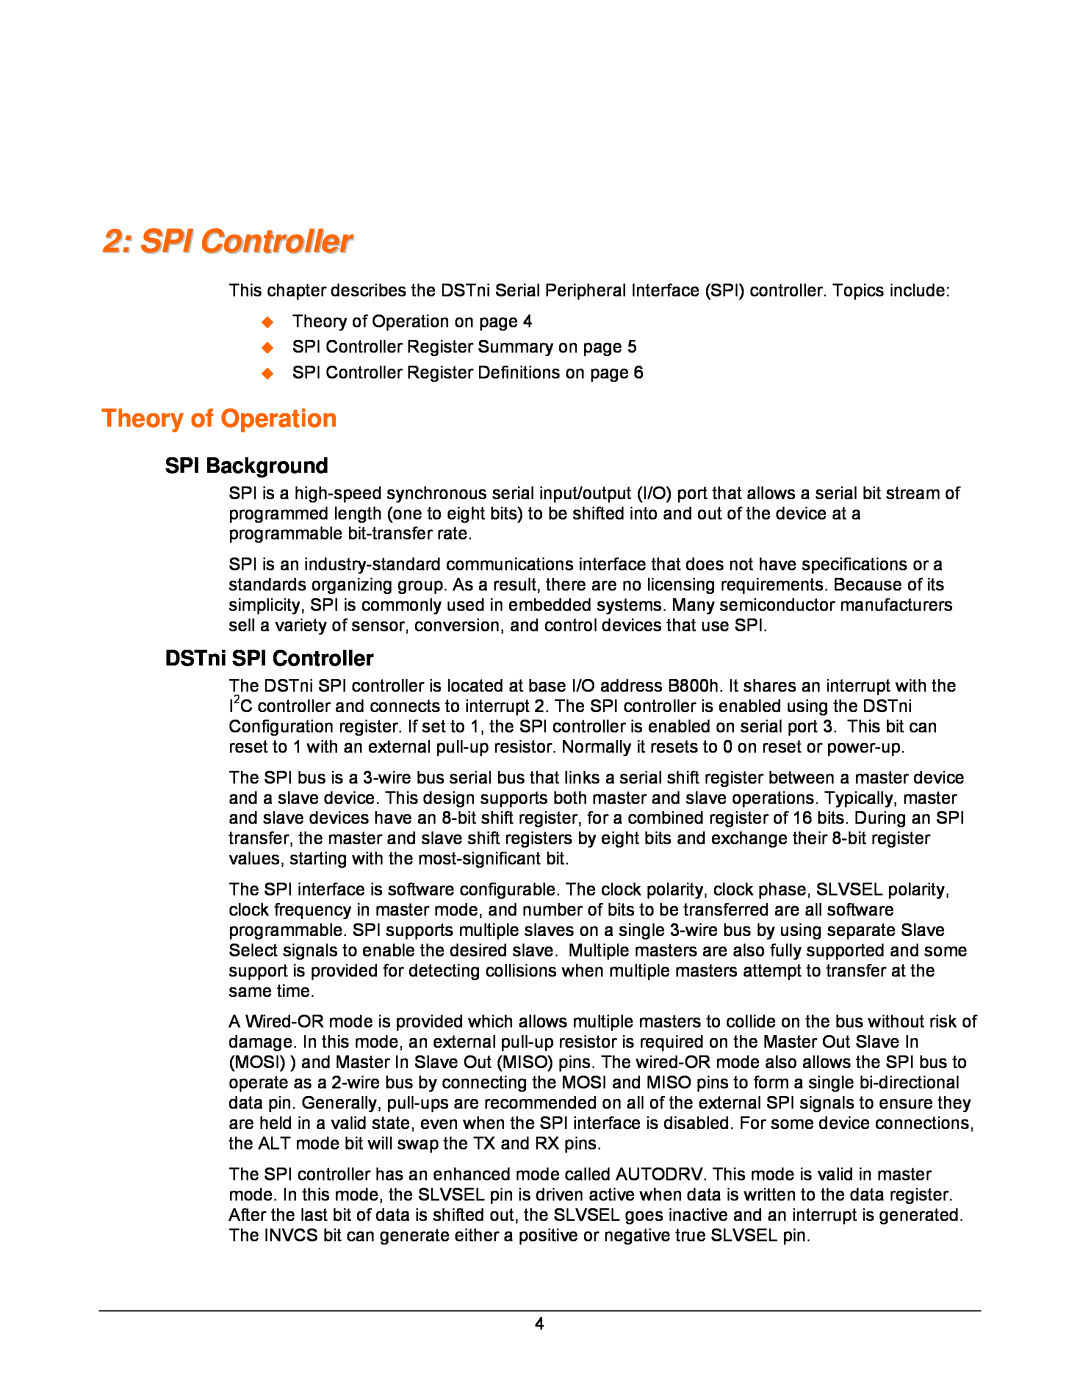 Lantronix DSTni-EX manual Theory of Operation, SPI Background, DSTni SPI Controller 